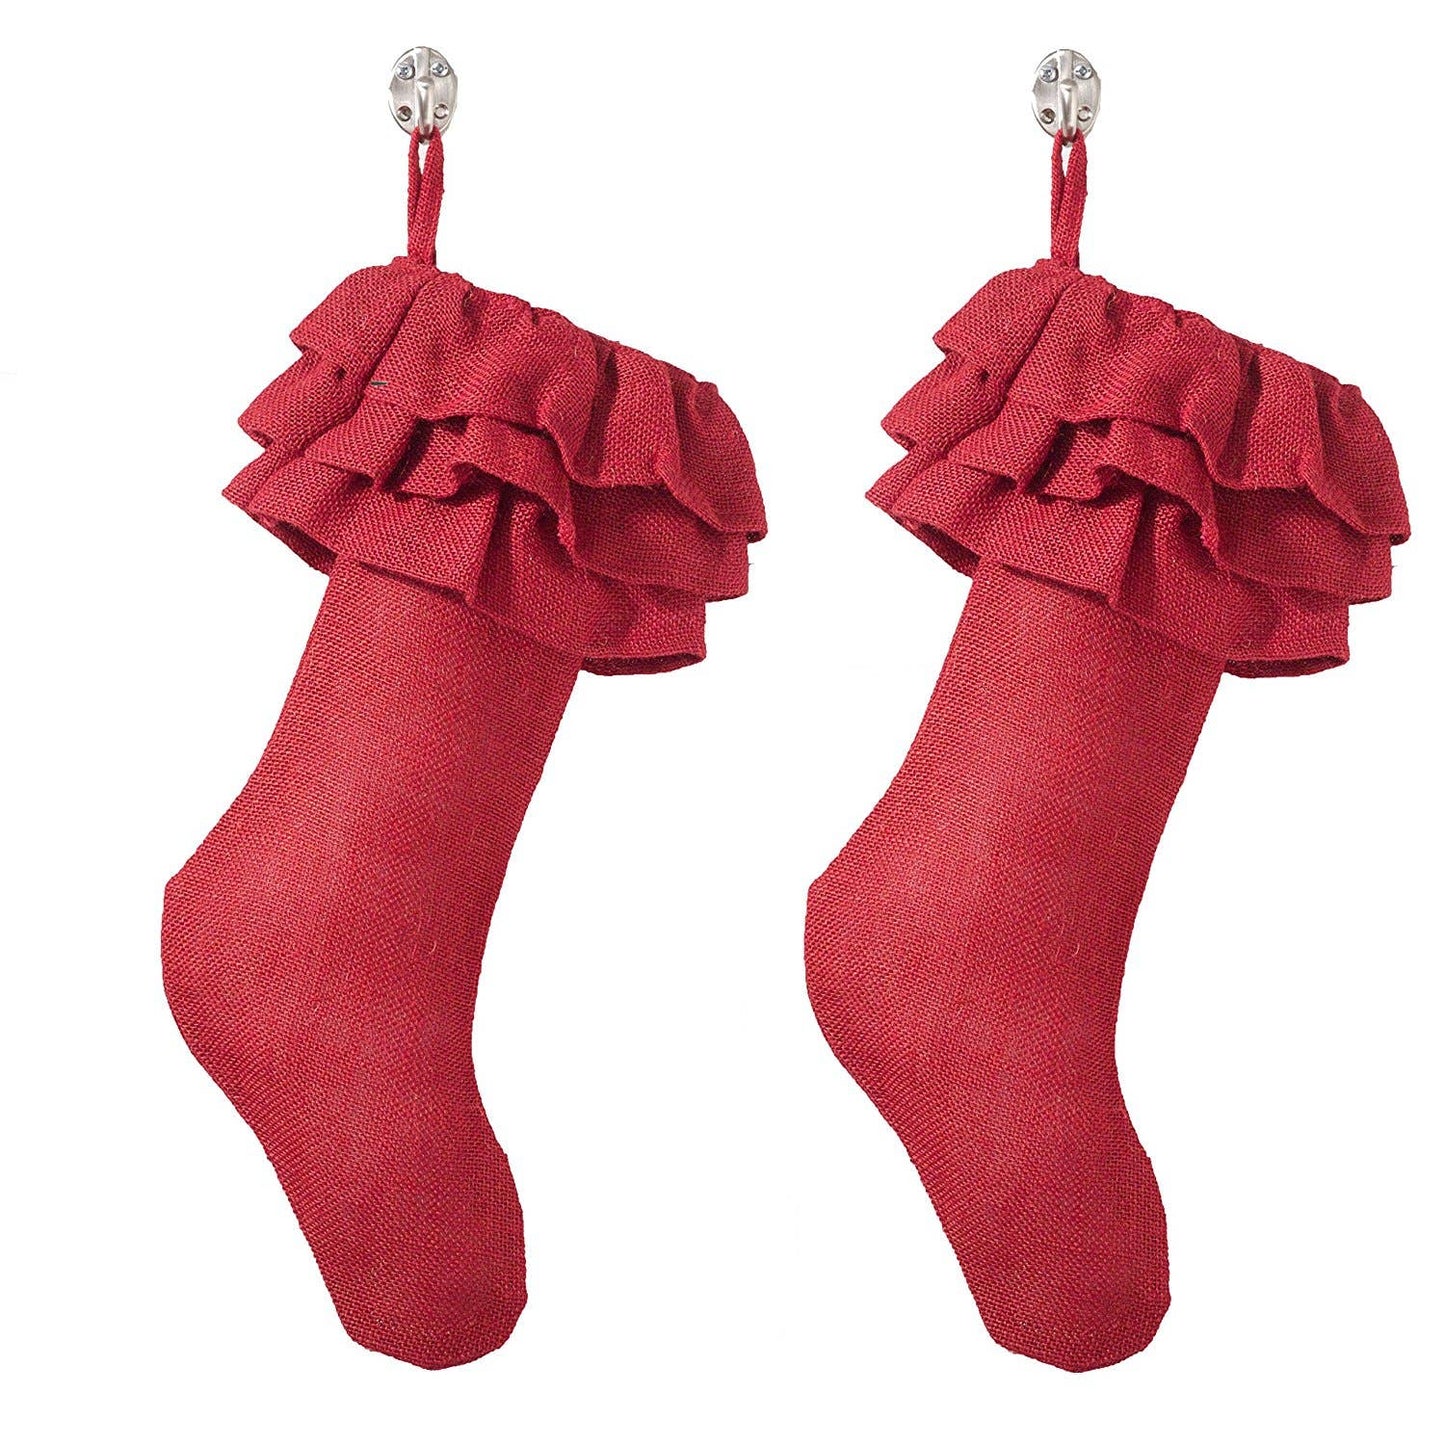 Ruffled Design Burlap Christmas Tree Skirt, Stocking: 56" Tree Skirt / Red